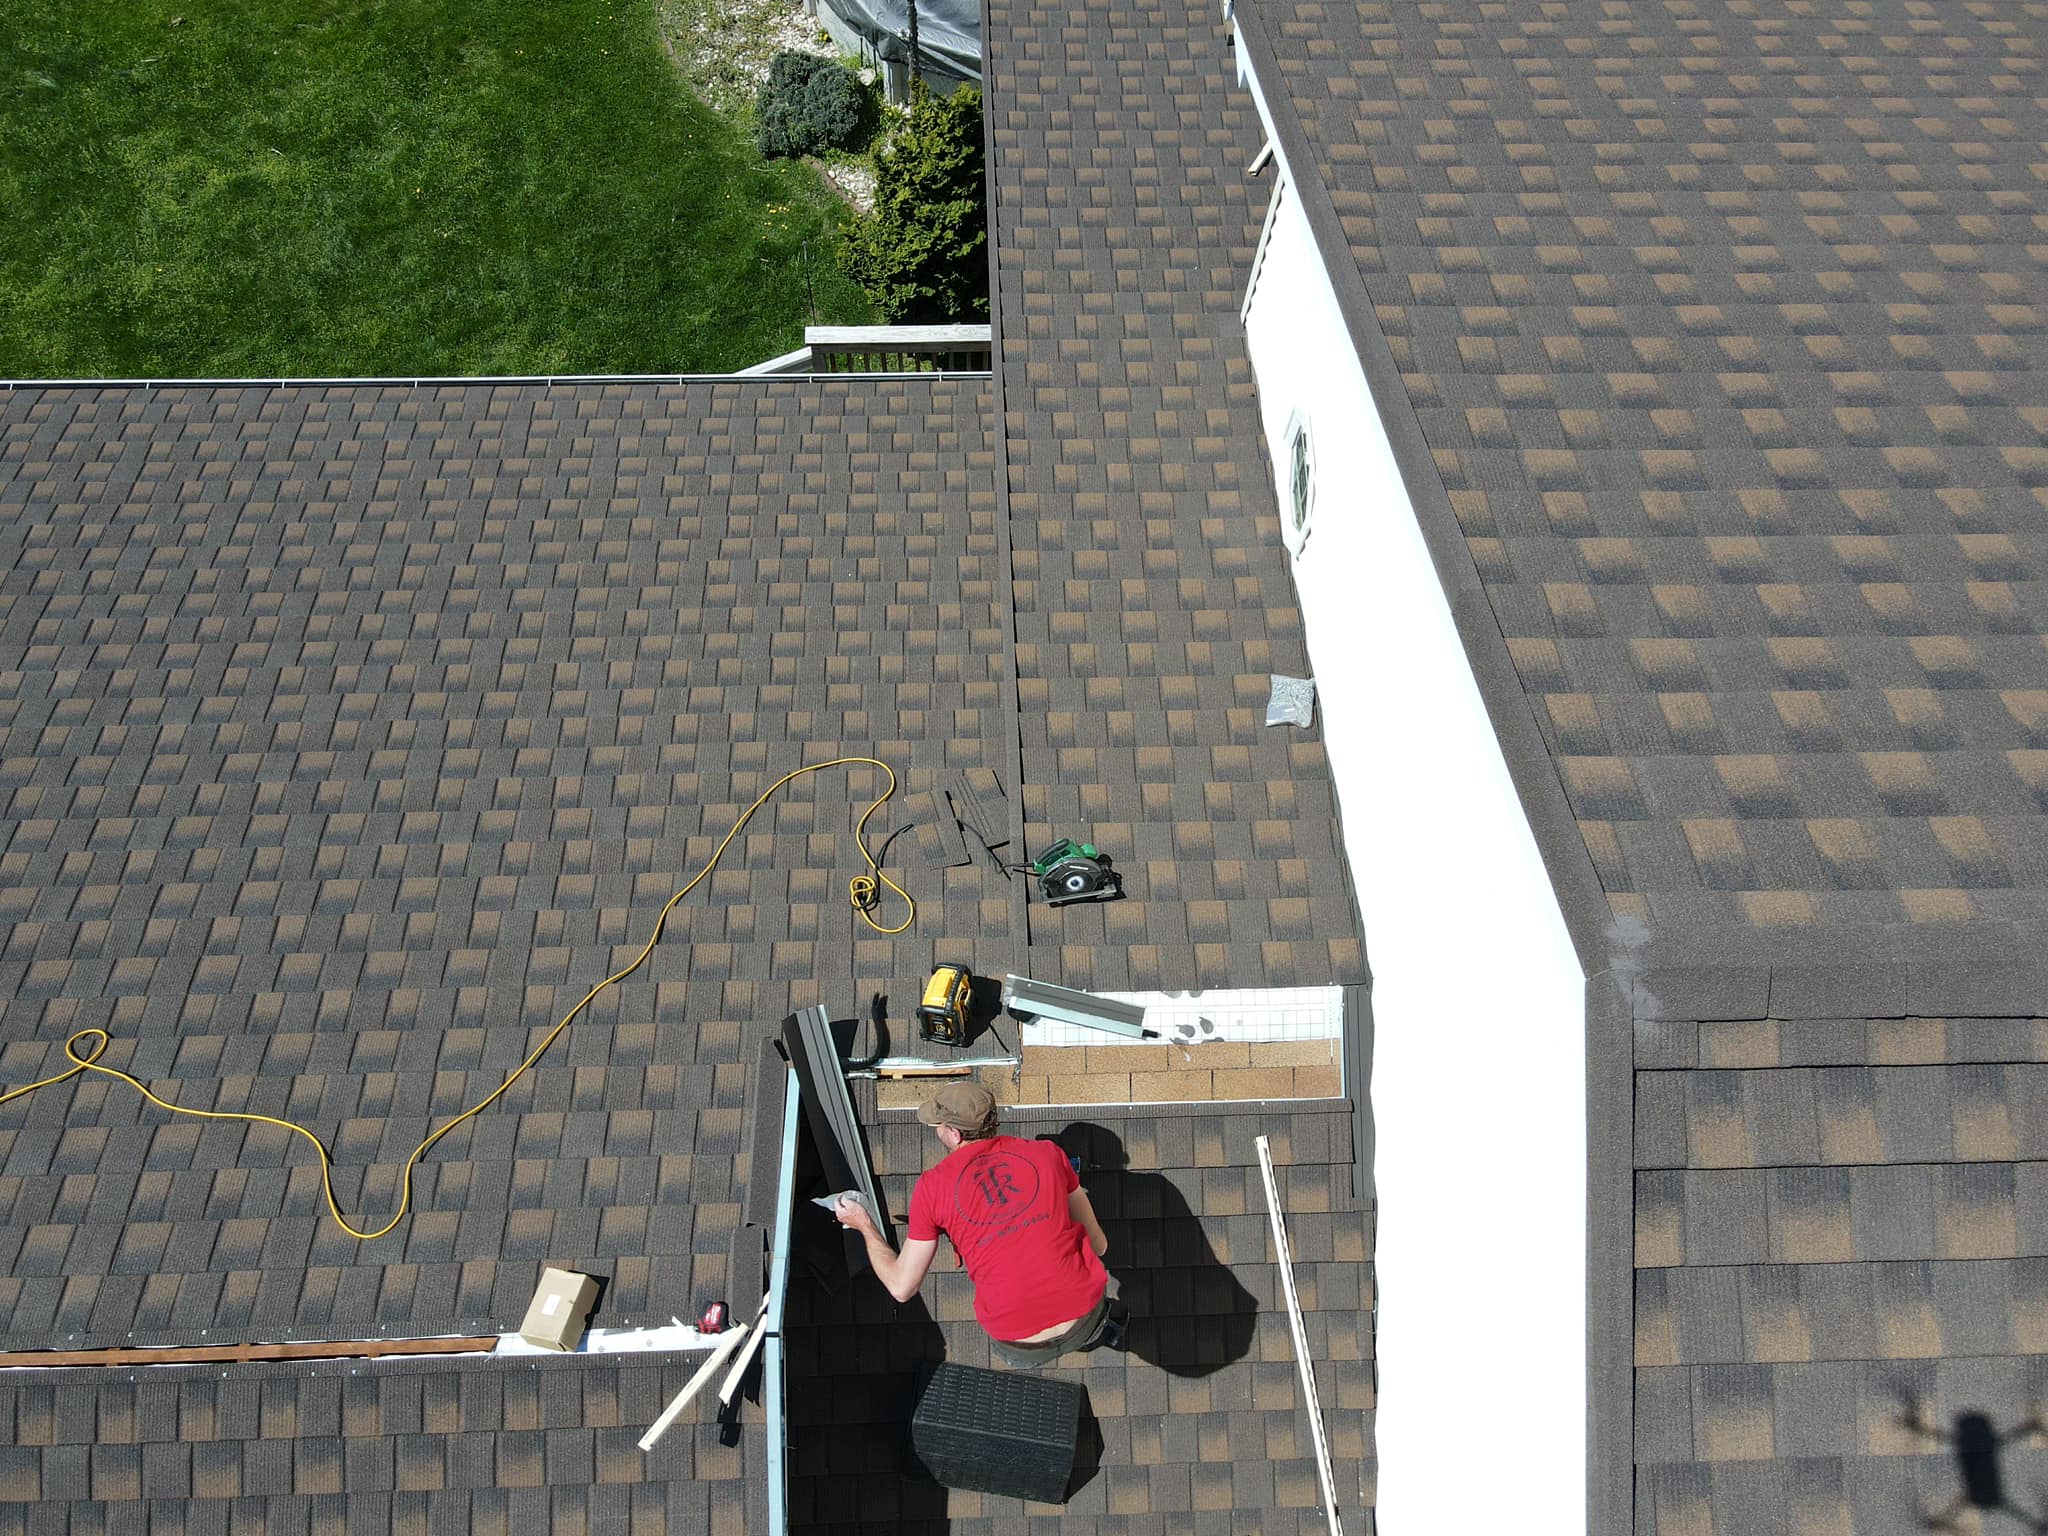 Man on roof finishing repairs on shingles